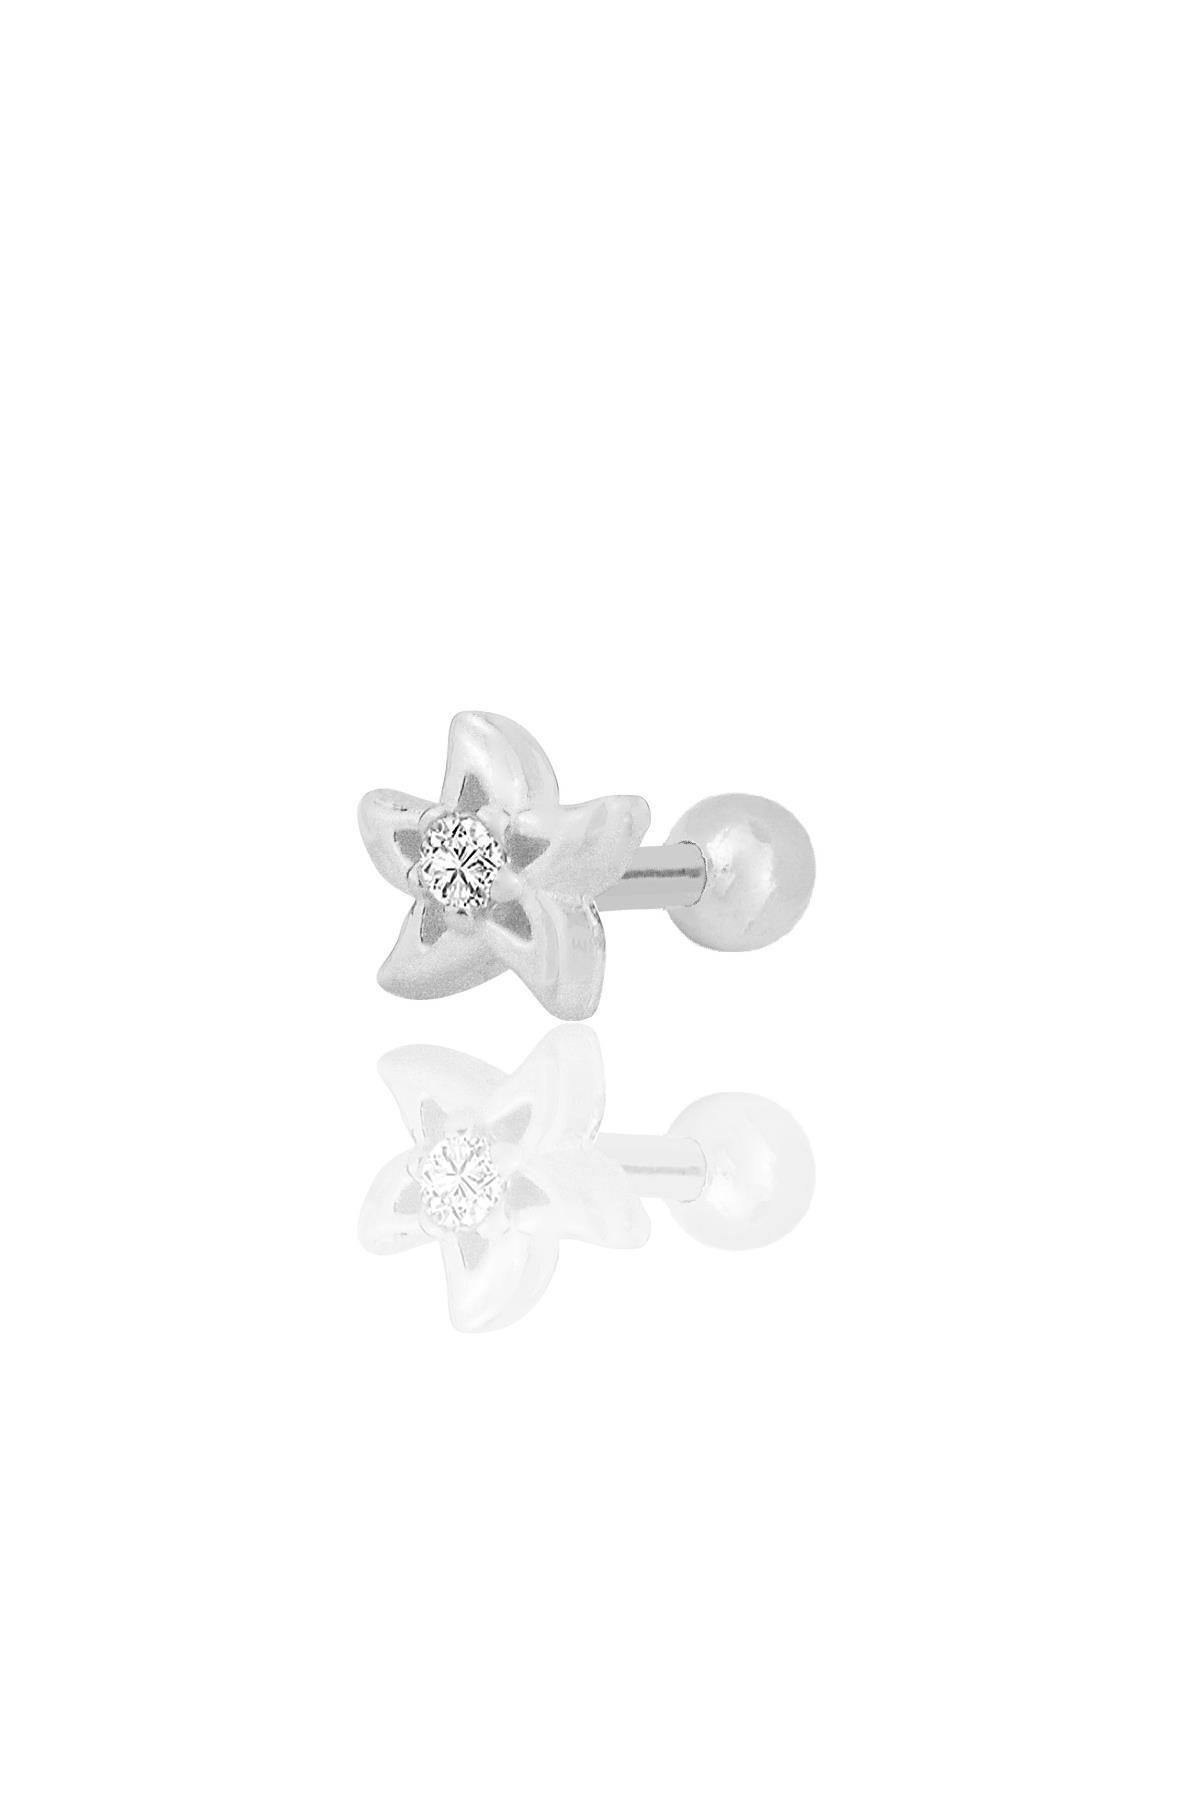 Söğütlü Silver Gümüş rodyumlu zirkon taşlı yıldız modeli Tragus helix Piercing küpe SGTL12317RODAJ